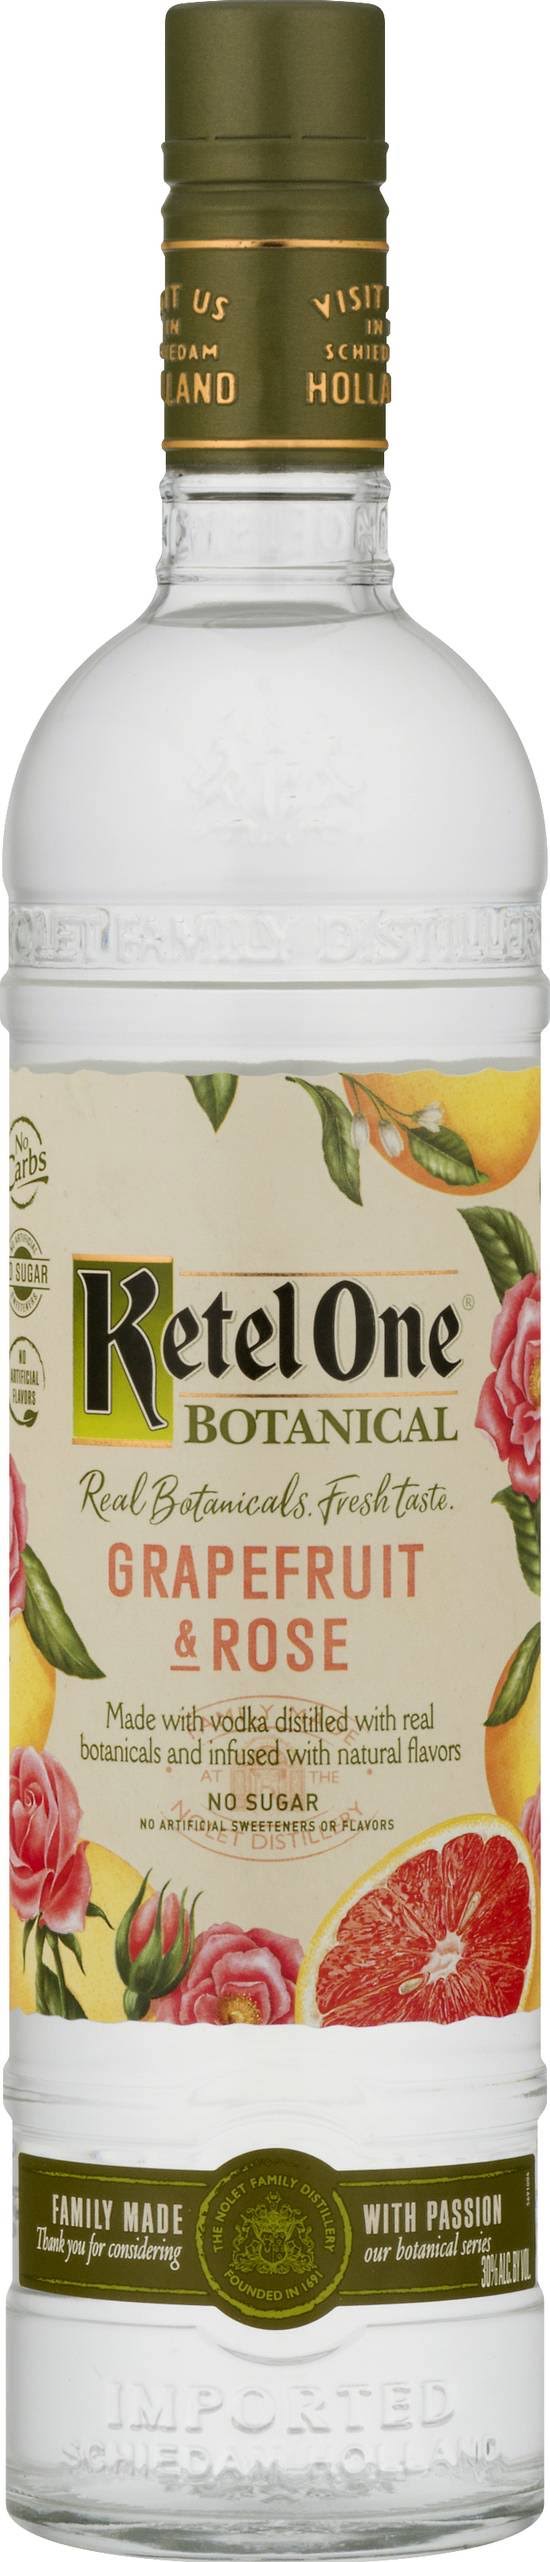 Ketel One Botanical Grapefruit and Rose 750 mL bottle